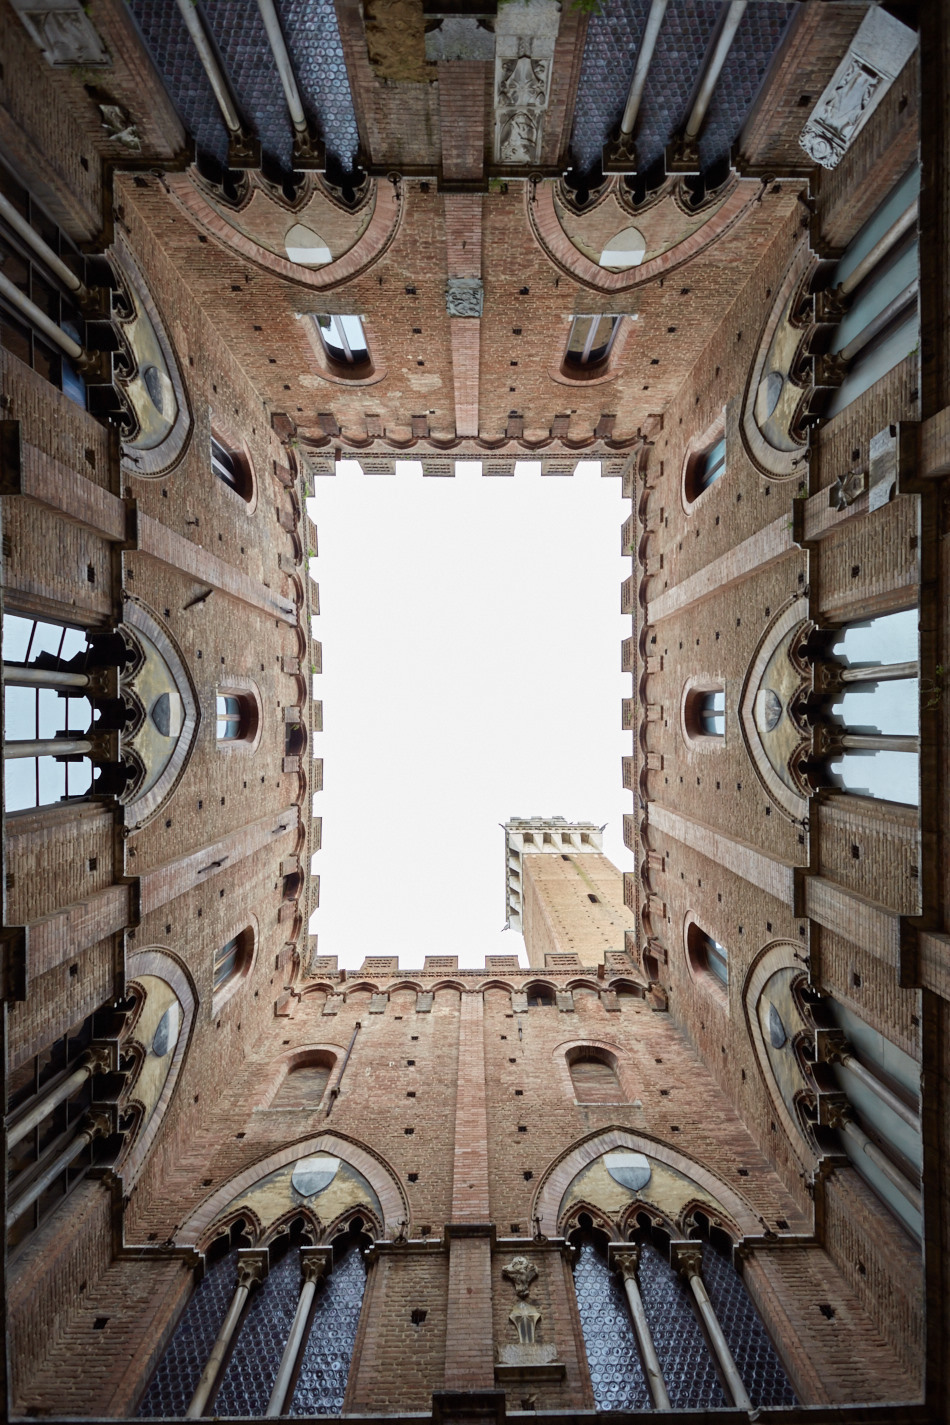 Siena Towers